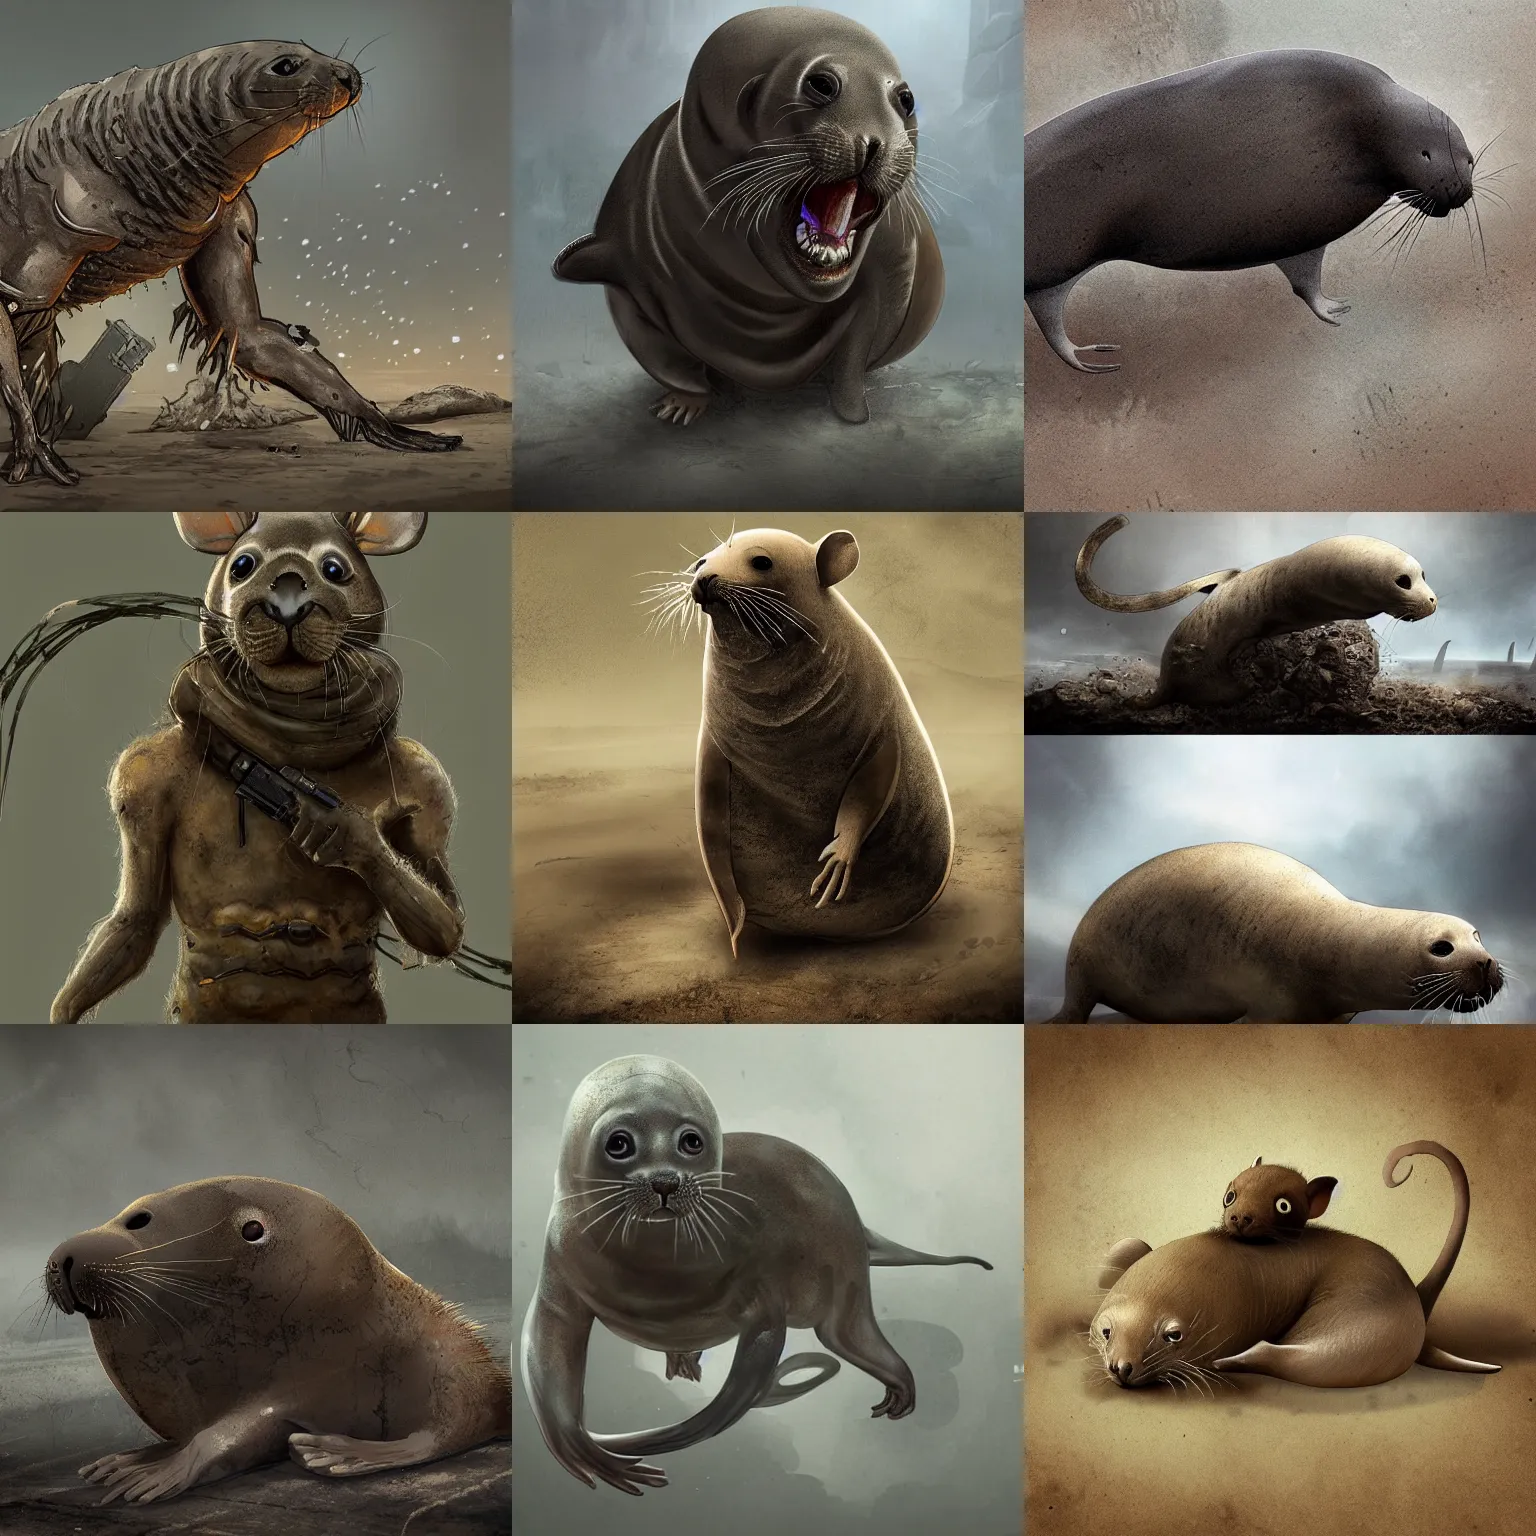 Prompt: seal mouse chimera, post apocalyptic, award winning digital art, featured on artstation